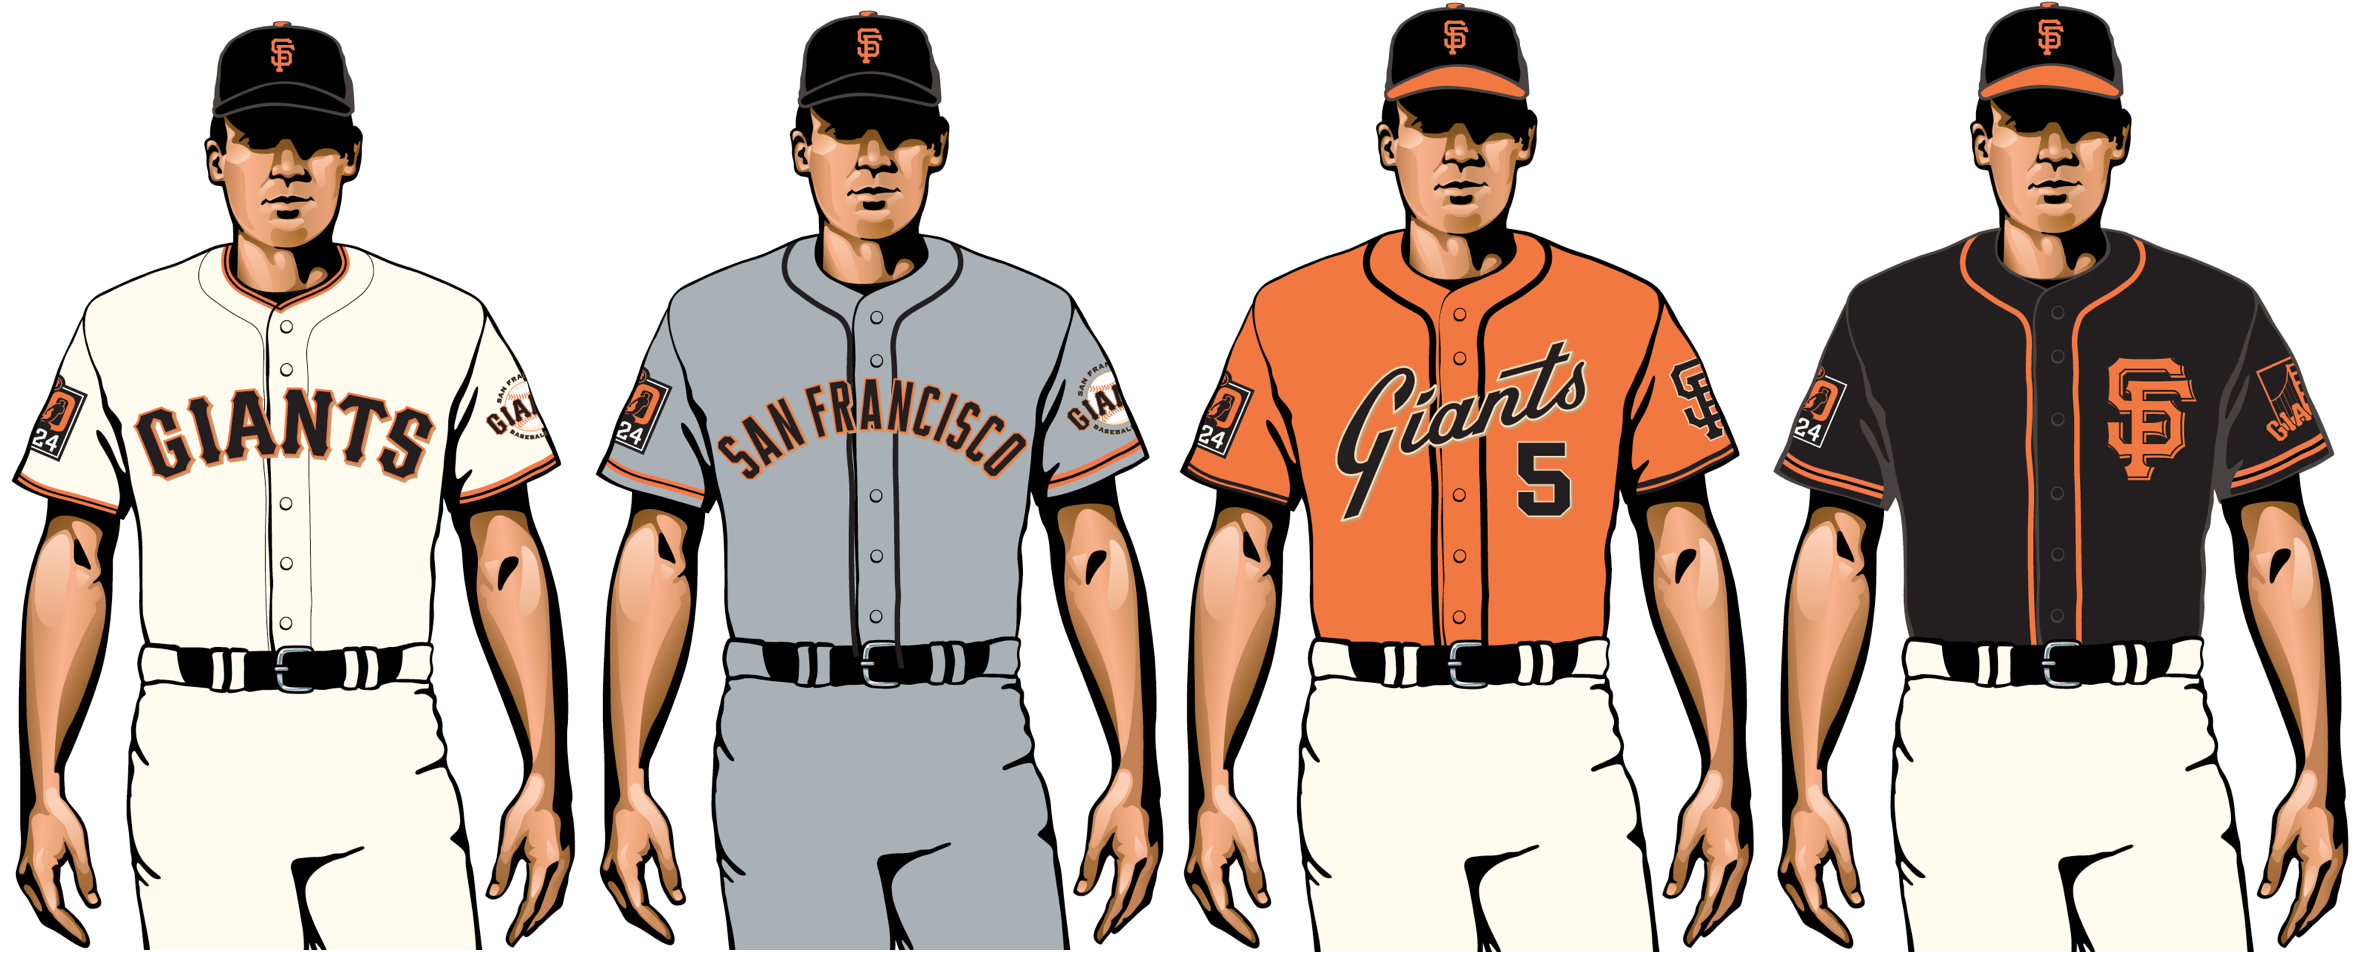 best looking baseball uniforms